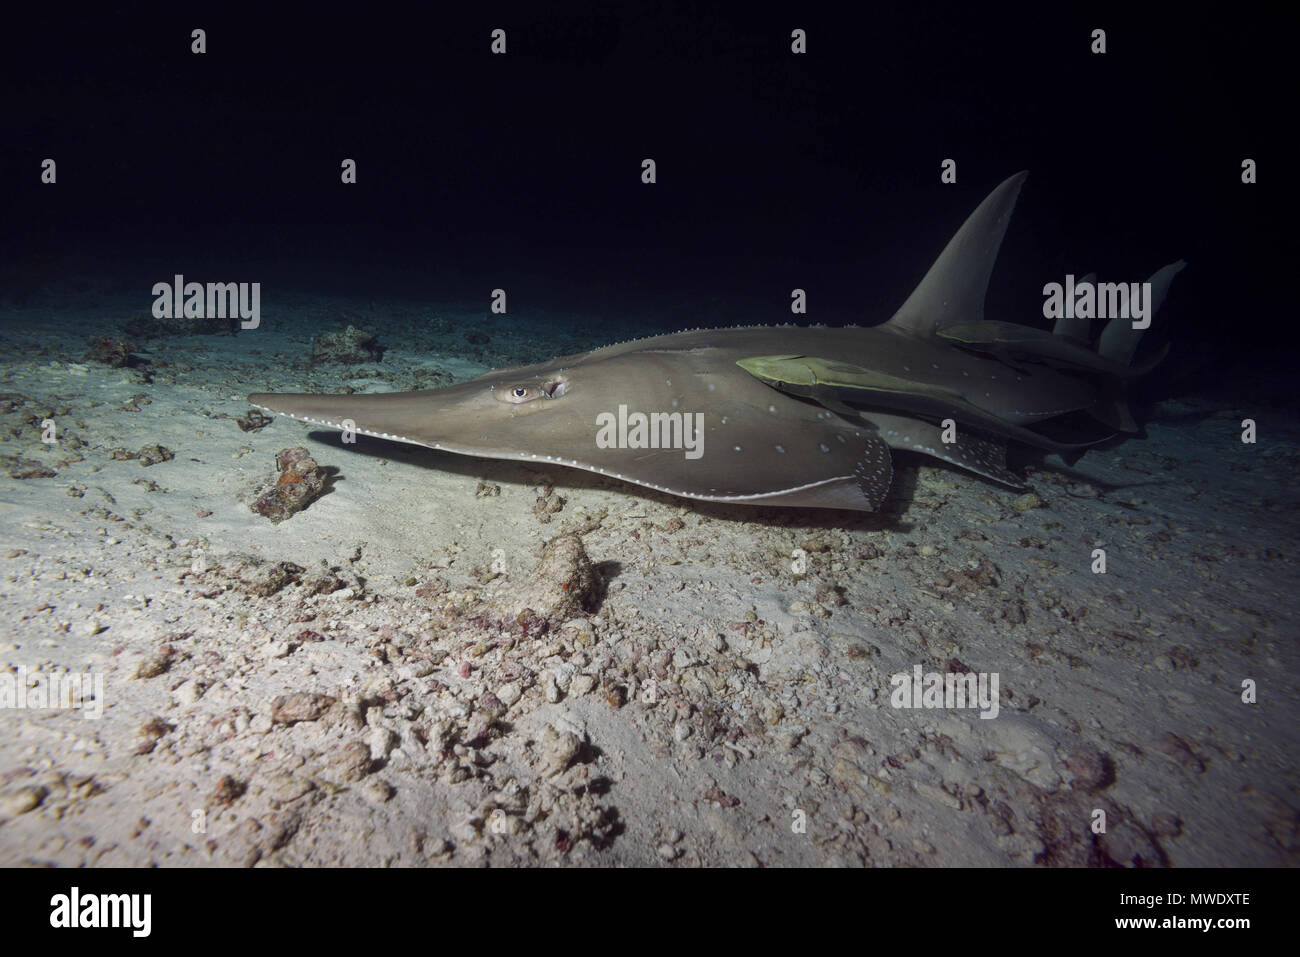 Indian Ocean, Maldives. 26th Dec, 2010. Giant Guitarfish (Rhynchobatus djiddensis) swims over sandy bottom in the night Credit: Andrey Nekrasov/ZUMA Wire/ZUMAPRESS.com/Alamy Live News Stock Photo